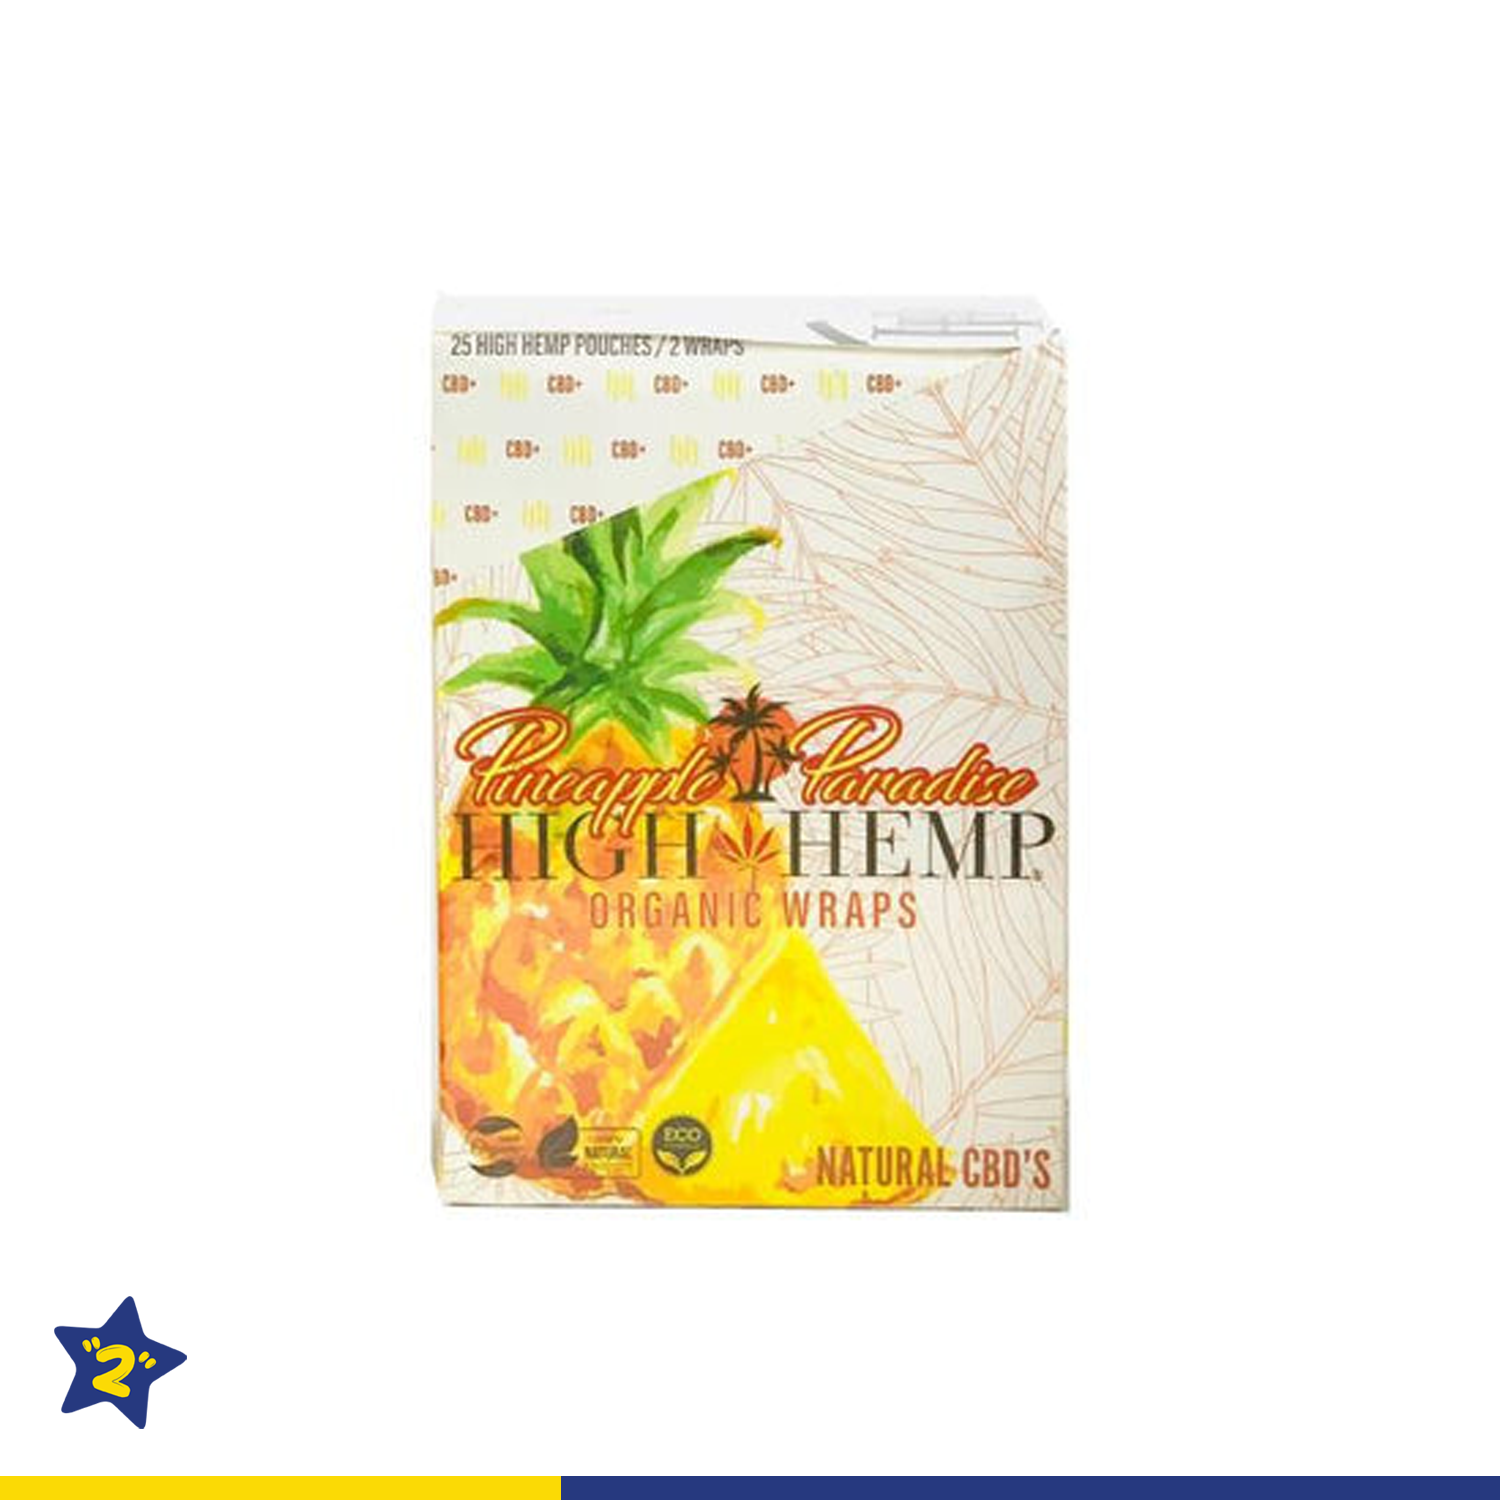 High Hemp Pineapple Paradise Organic Wraps